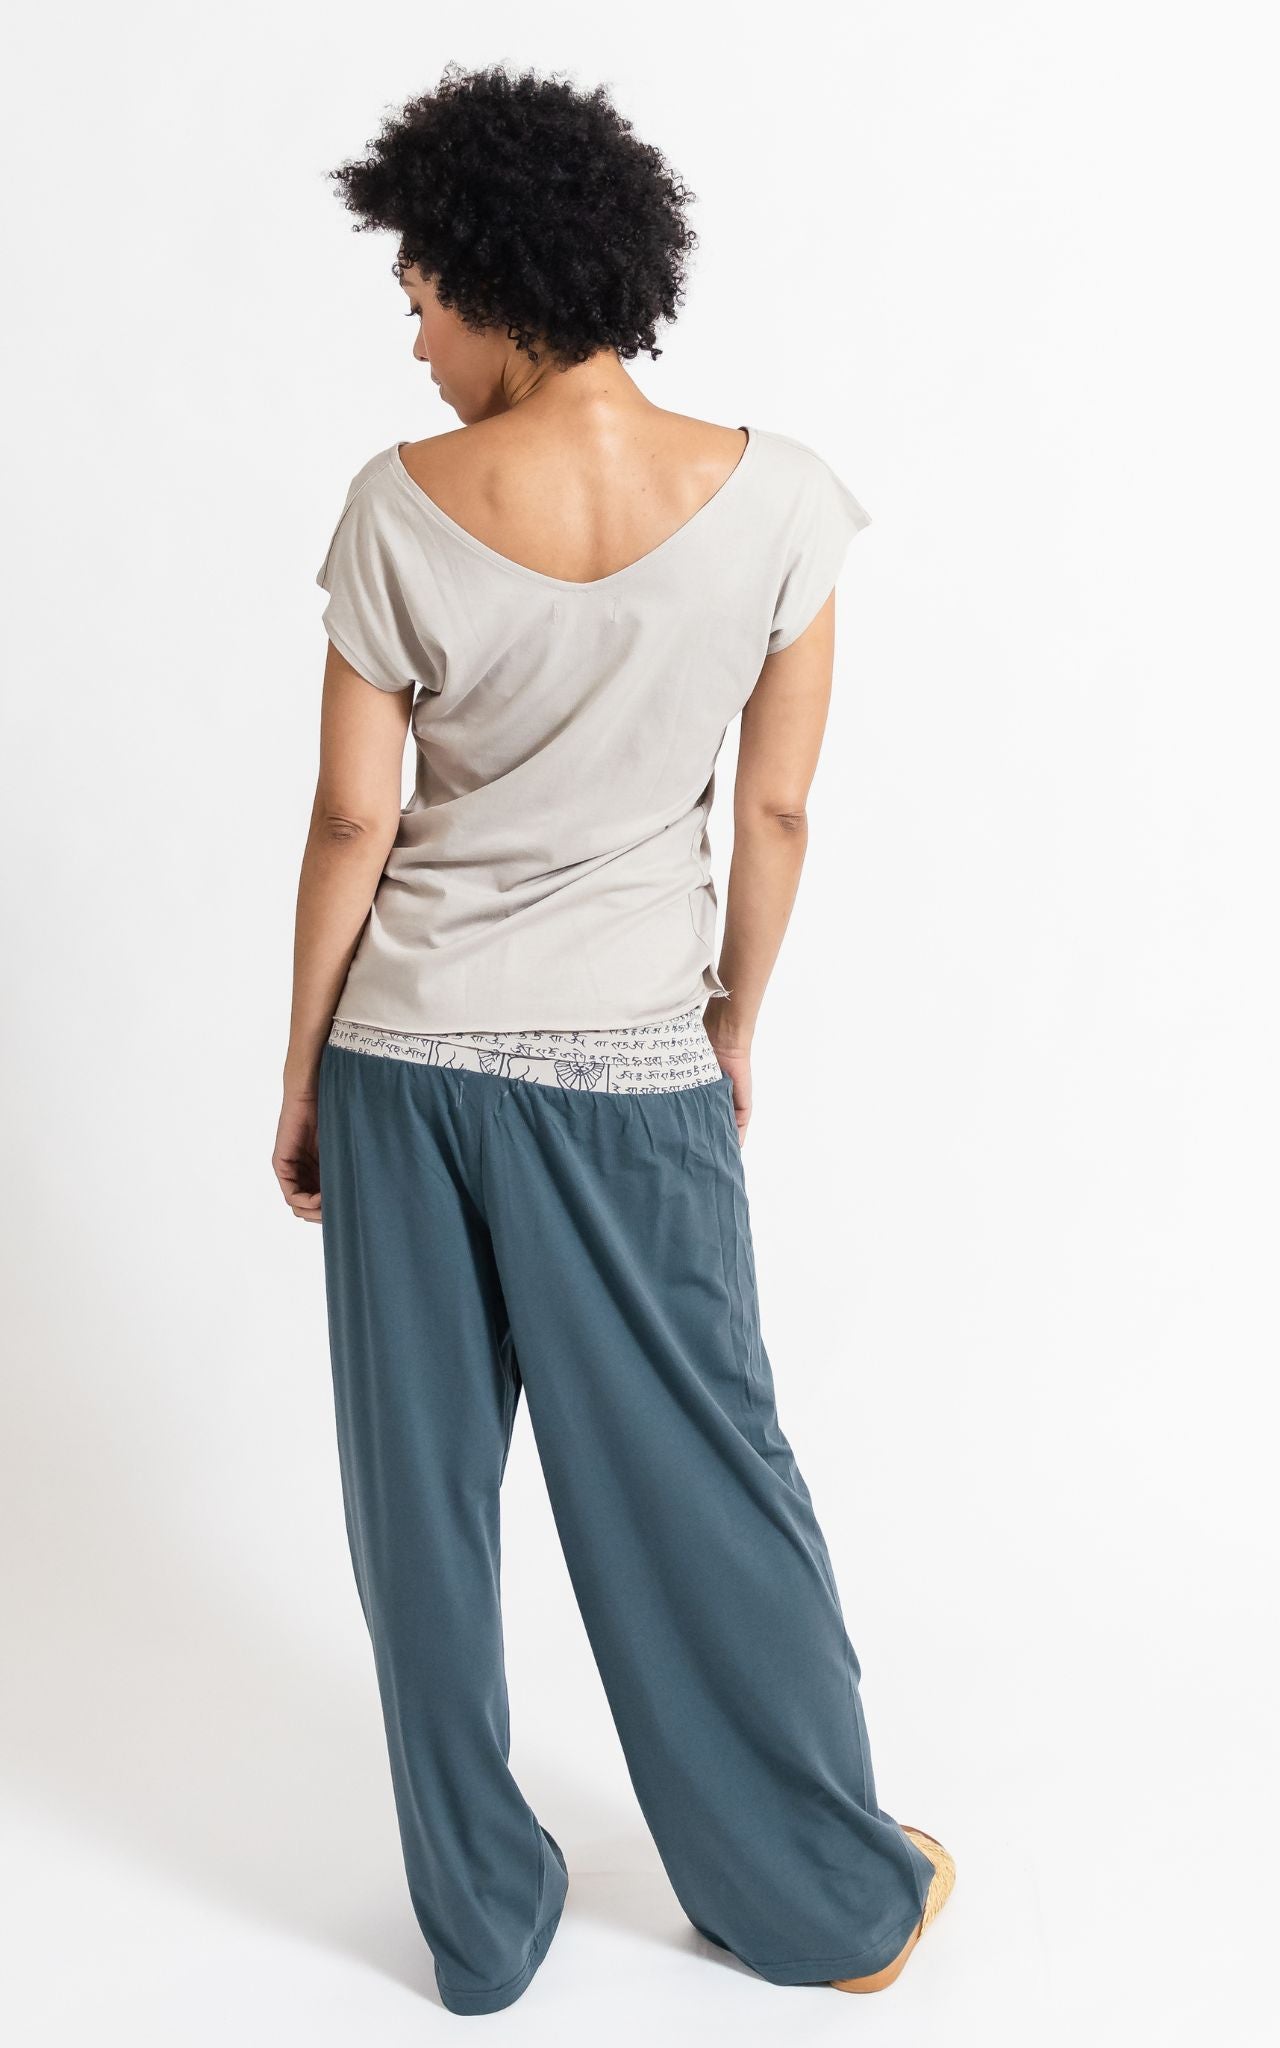 Surya Australia Organic Cotton 'Mantra' Pants made in Nepal - Cobalt